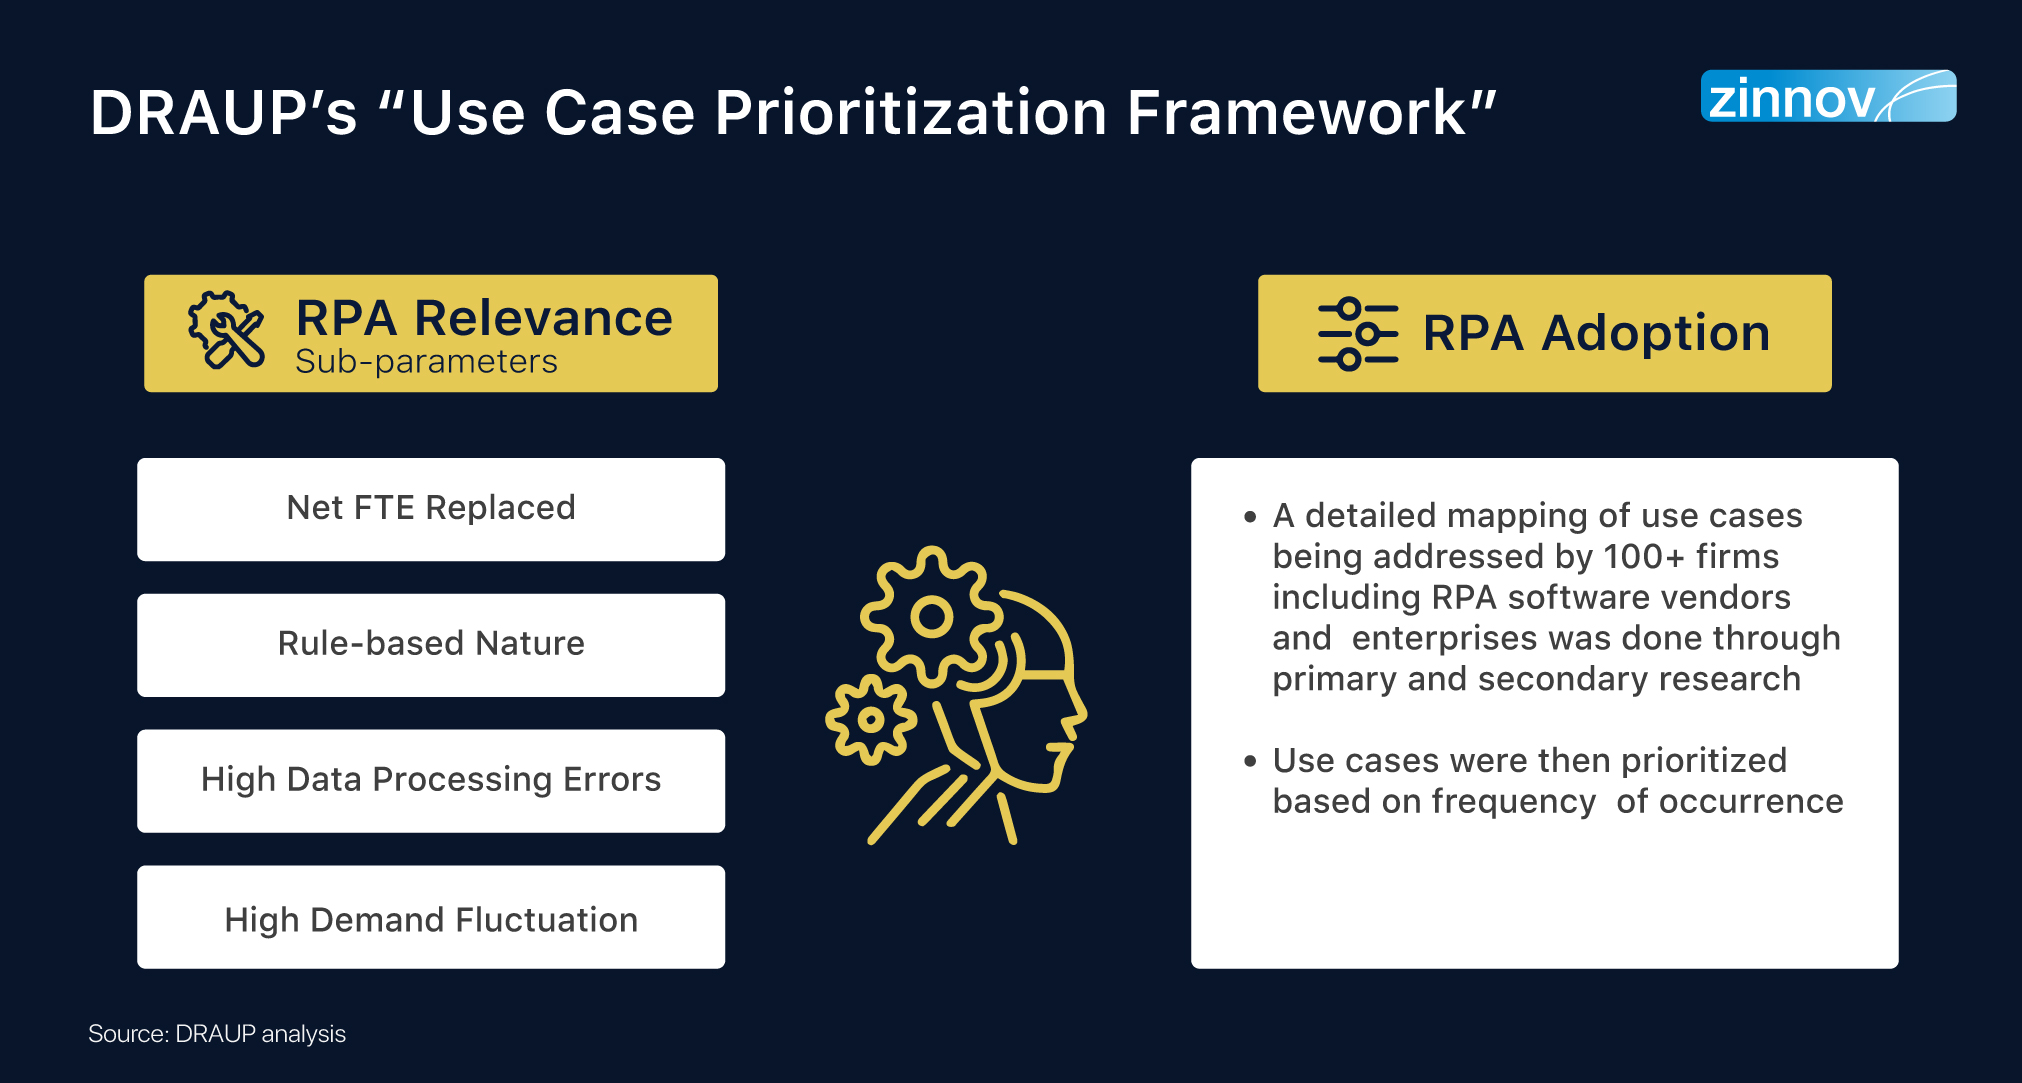 DRAUP’s Use Case Prioritization Framework